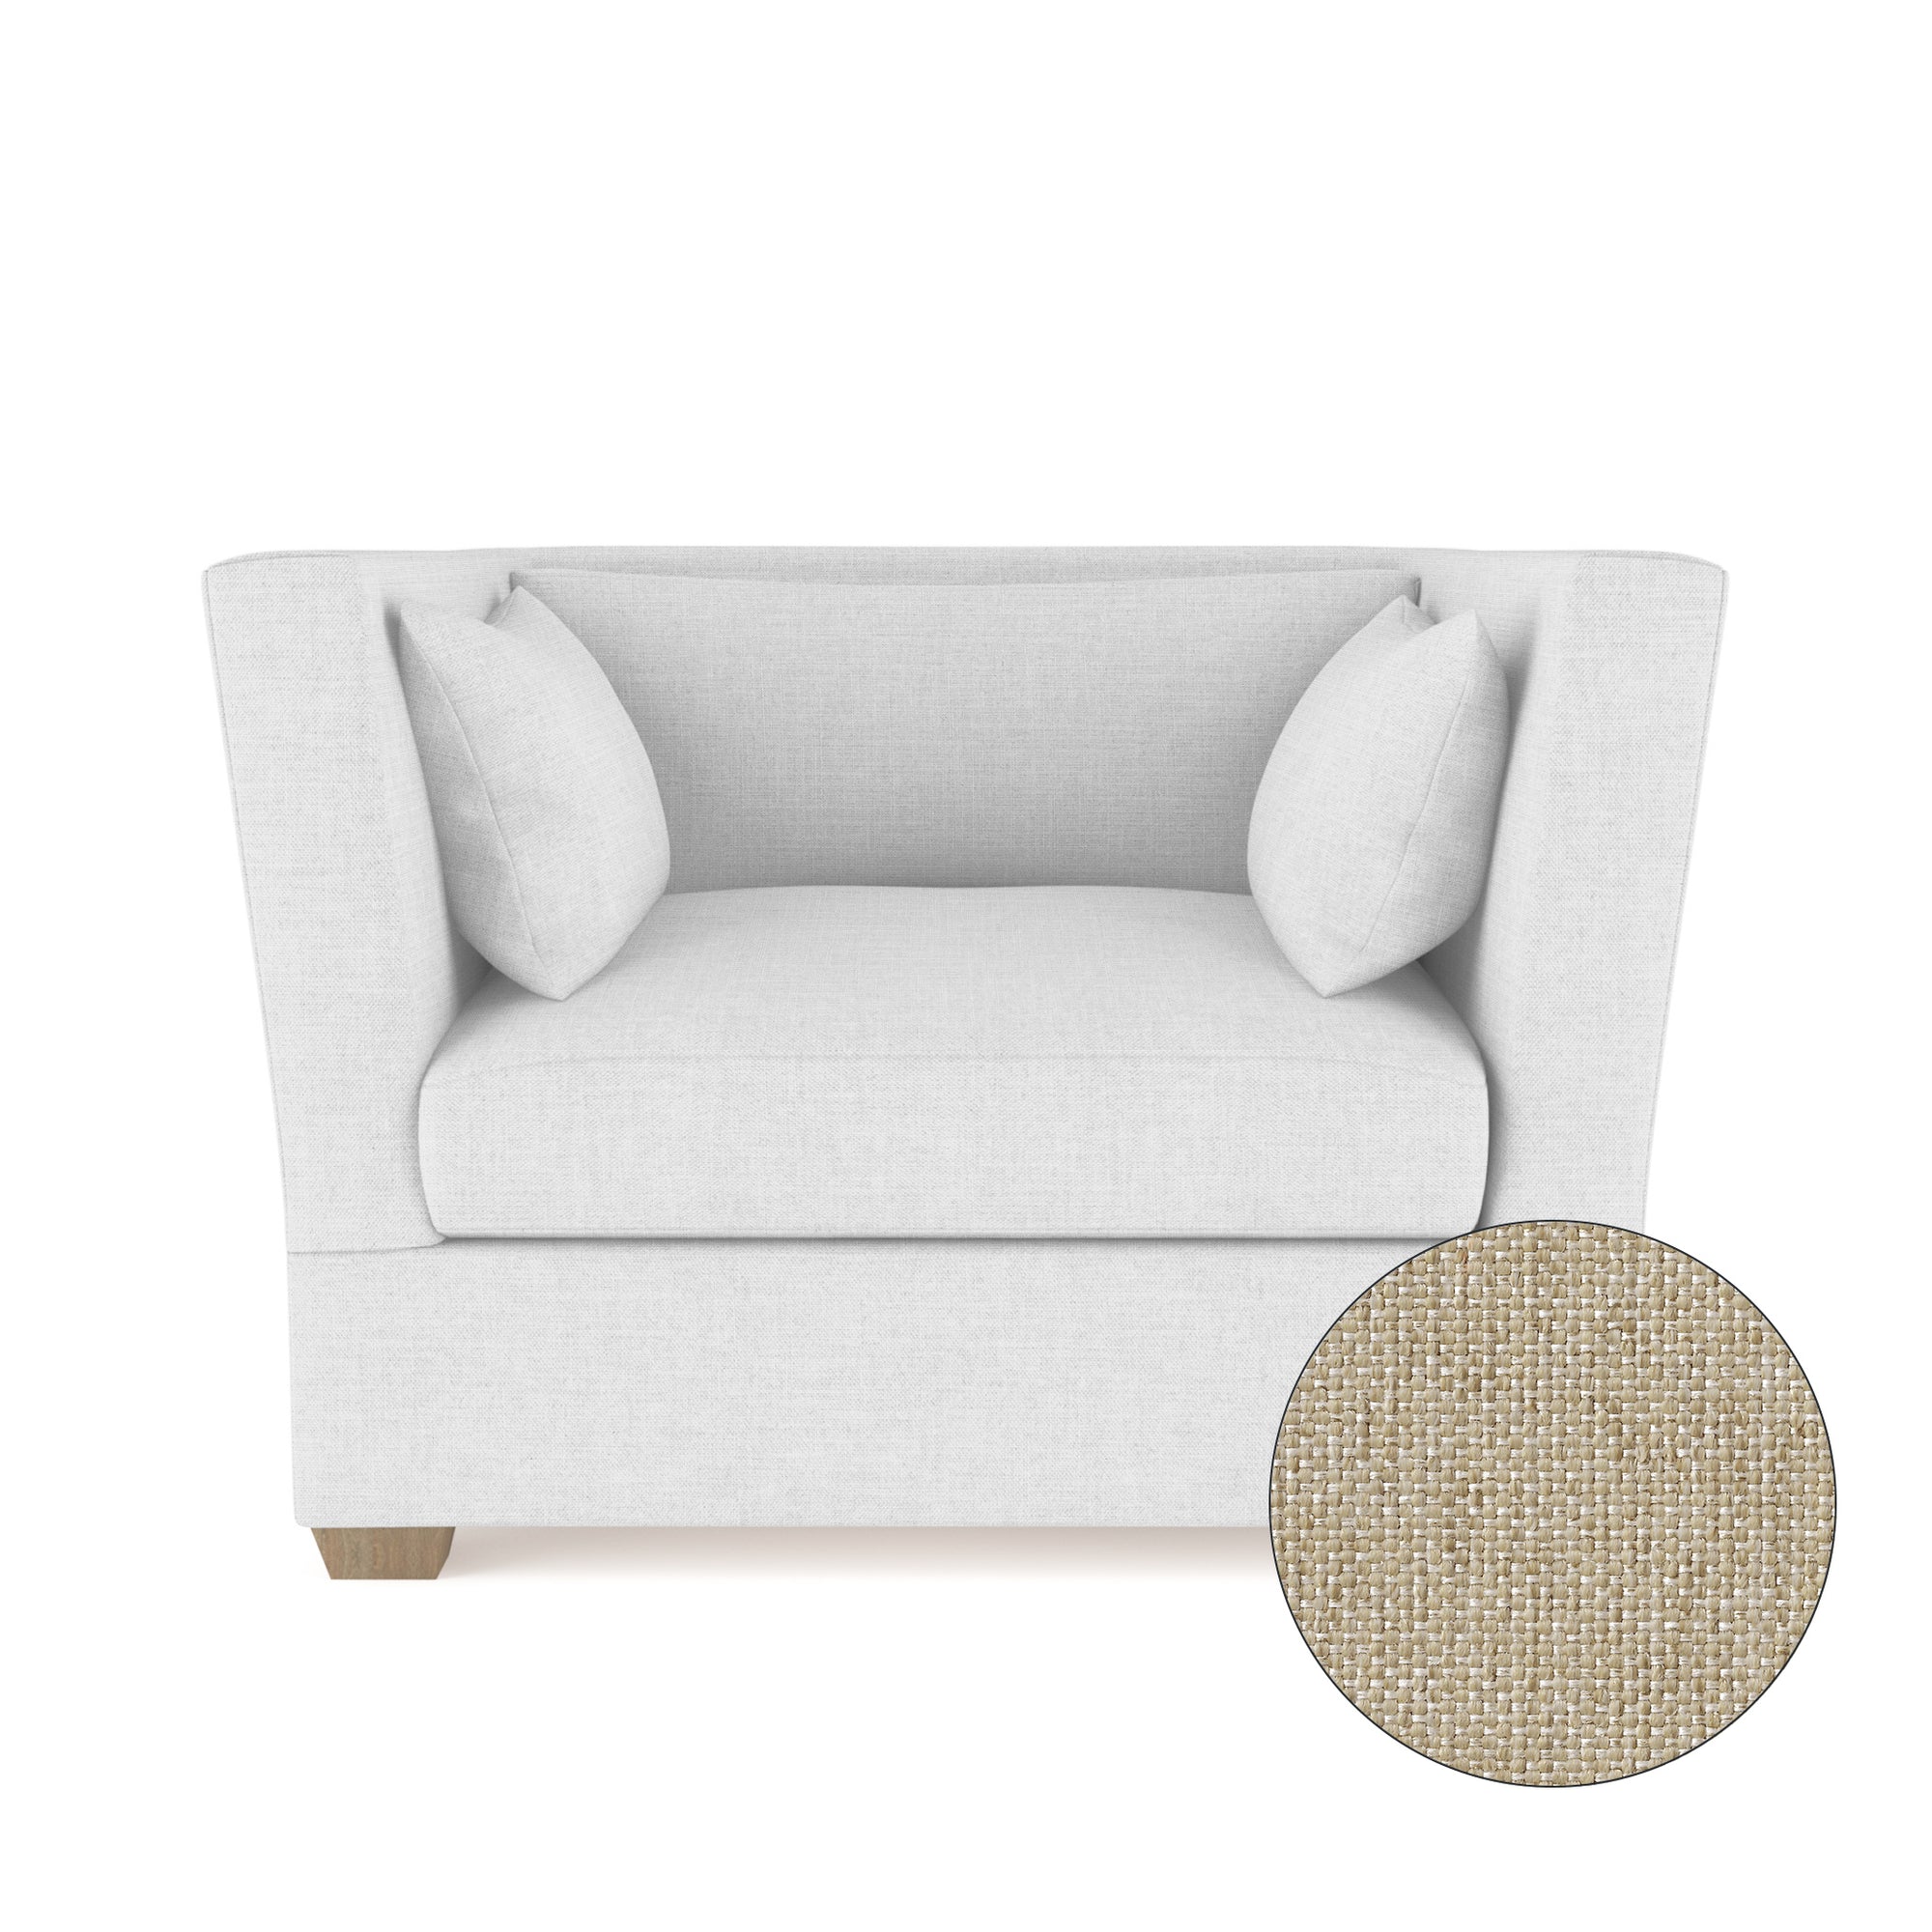 Rivington Chair - Oyster Pebble Weave Linen